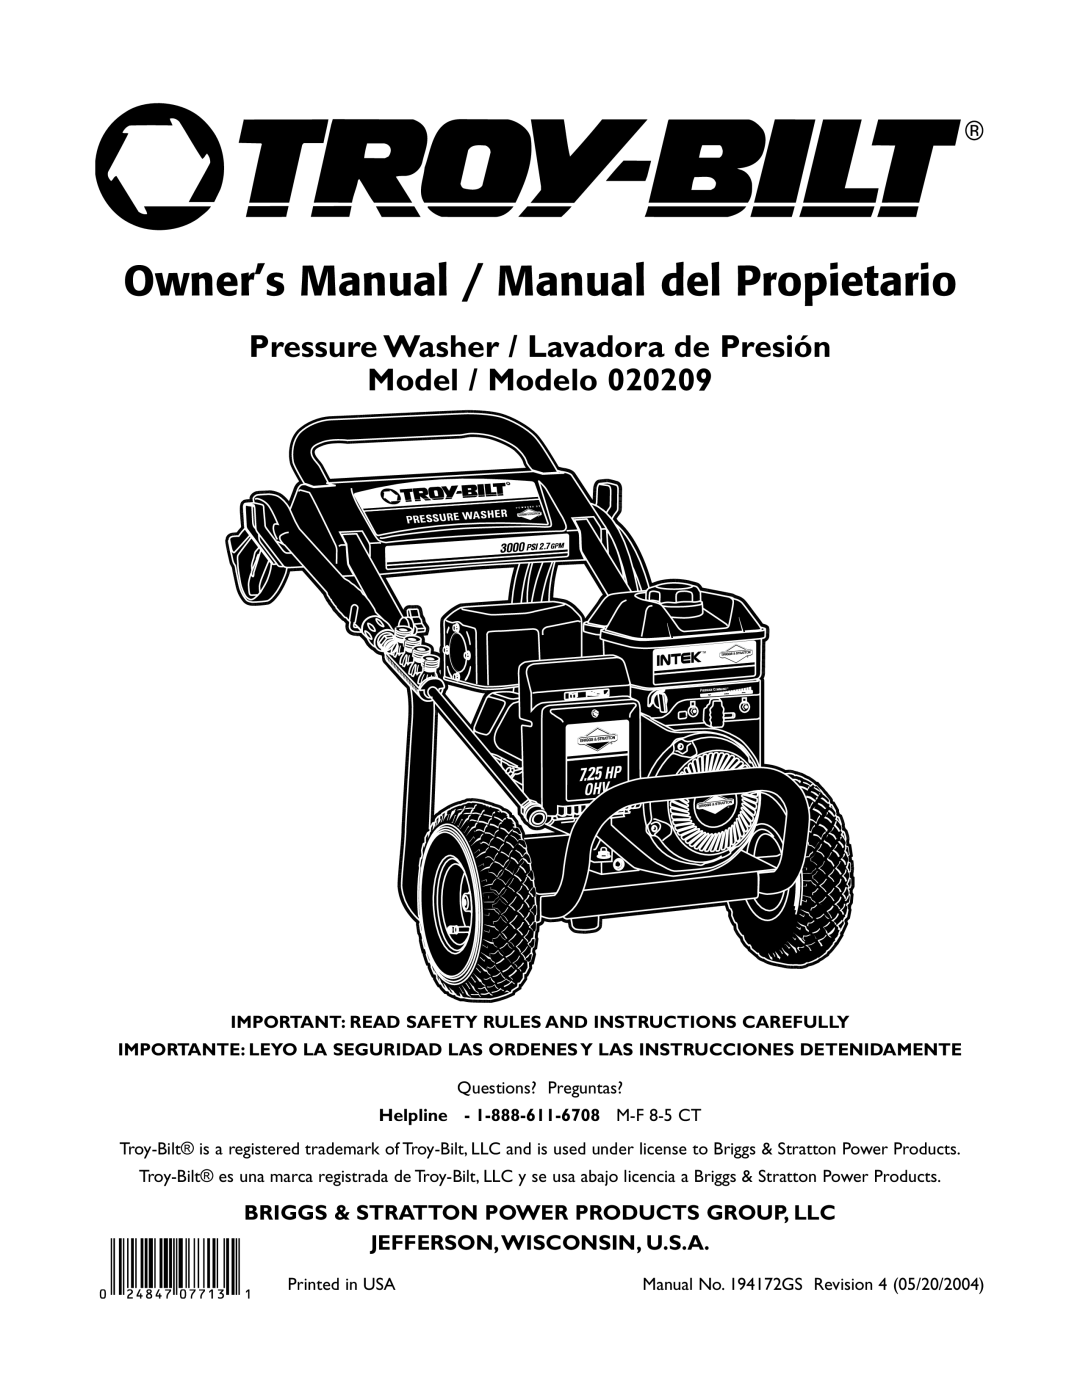 Briggs & Stratton 20209 owner manual Pressure Washer / Lavadora de Presión Model / Modelo, Jefferson,Wisconsin, U.S.A 